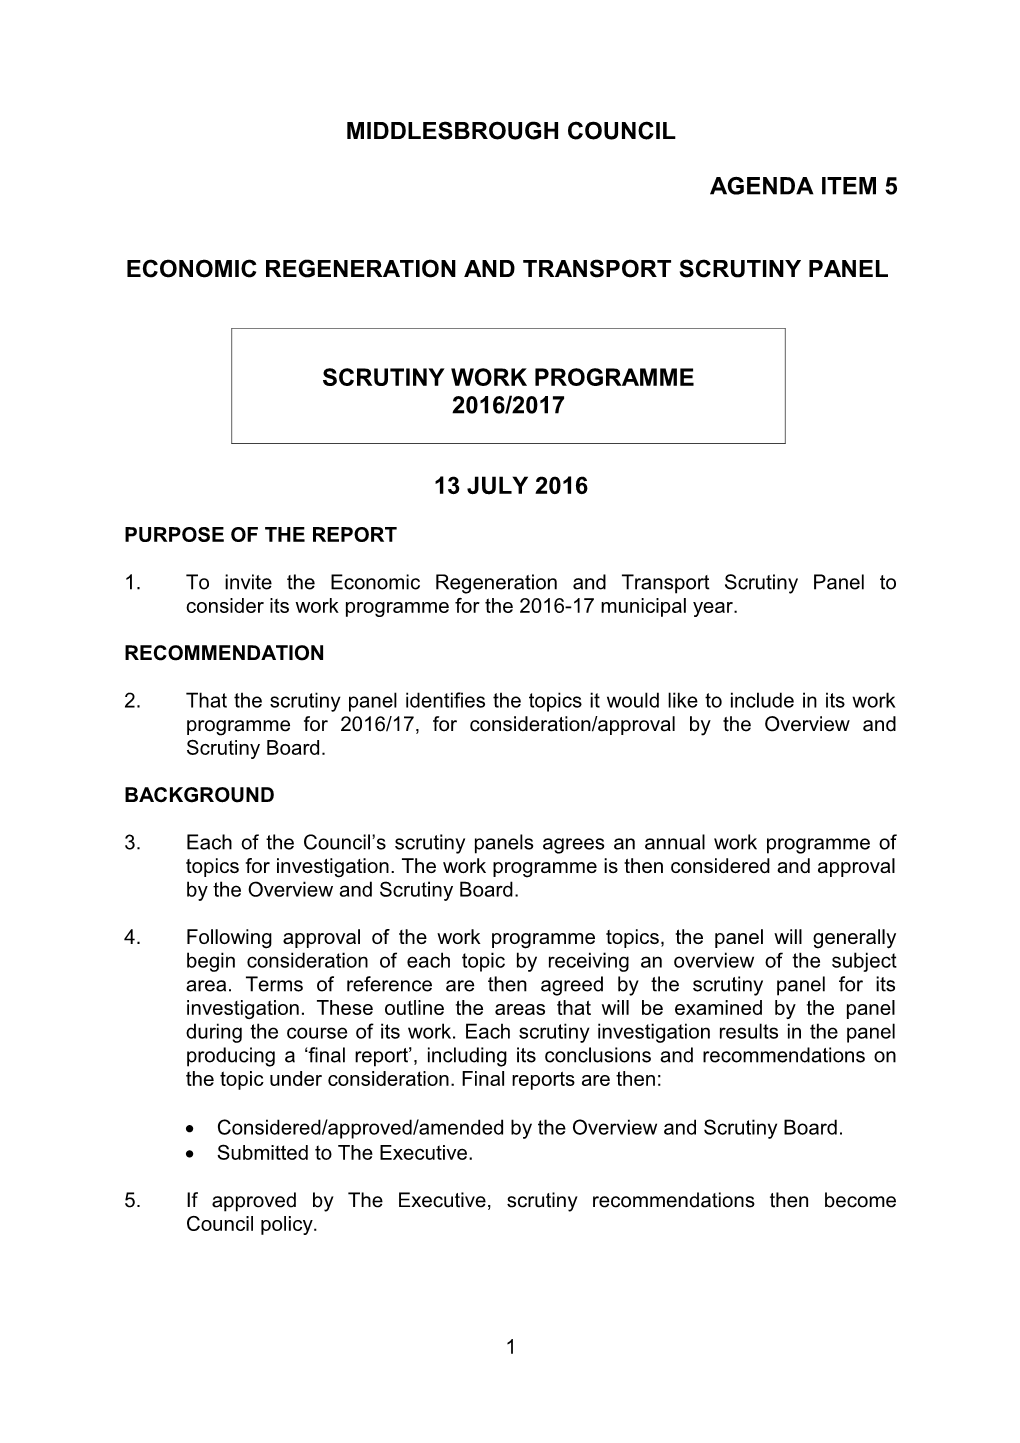 Economic Regeneration and Transport Scrutiny Panel